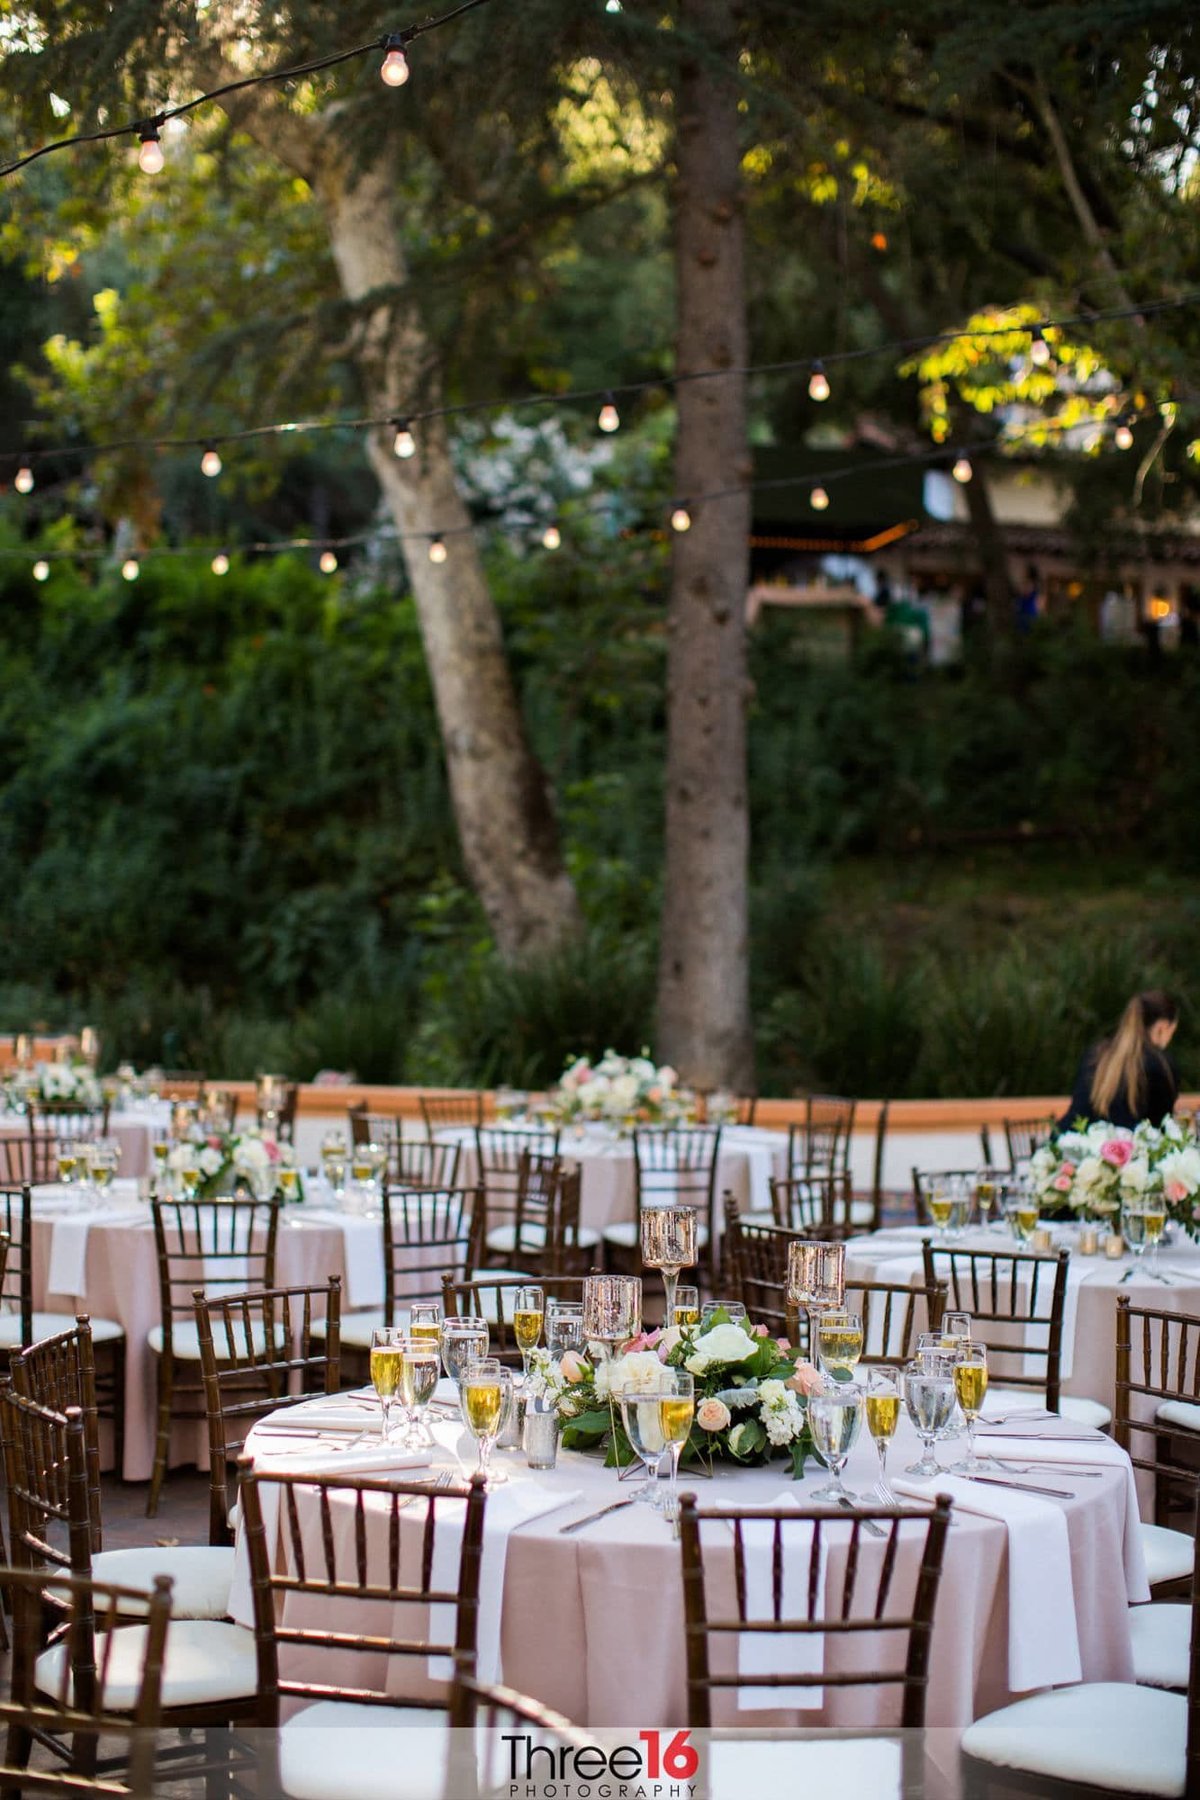 Outdoor table setup at wedding reception